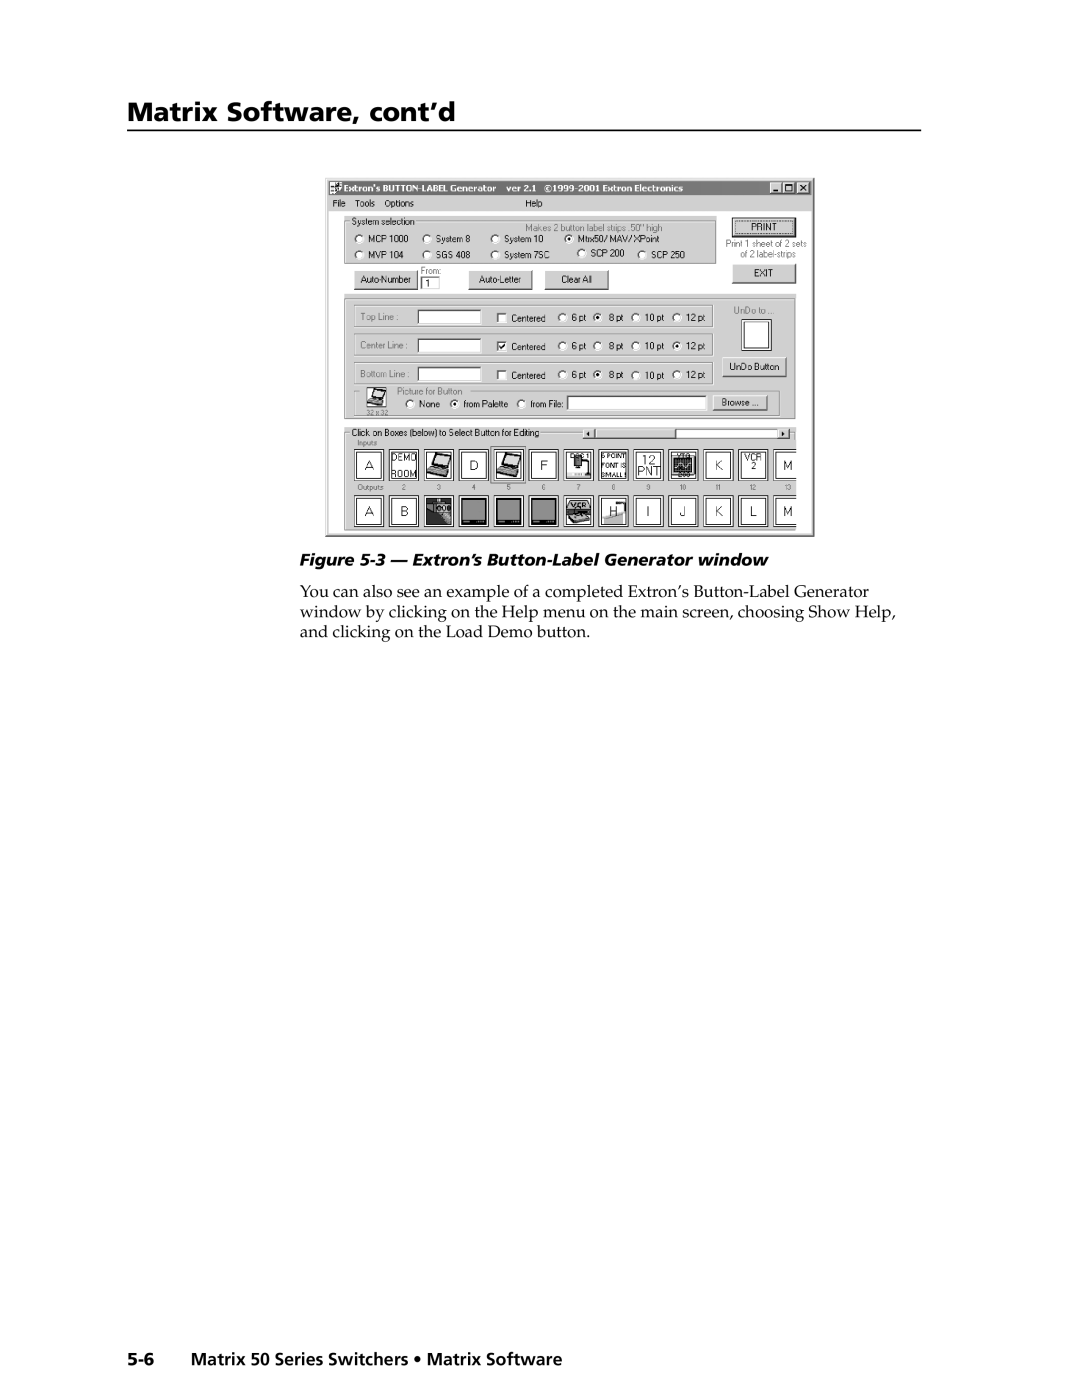 Extron electronic manual 3 - Extron’s Button-Label Generator window, Matrix 50 Series Switchers Matrix Software 